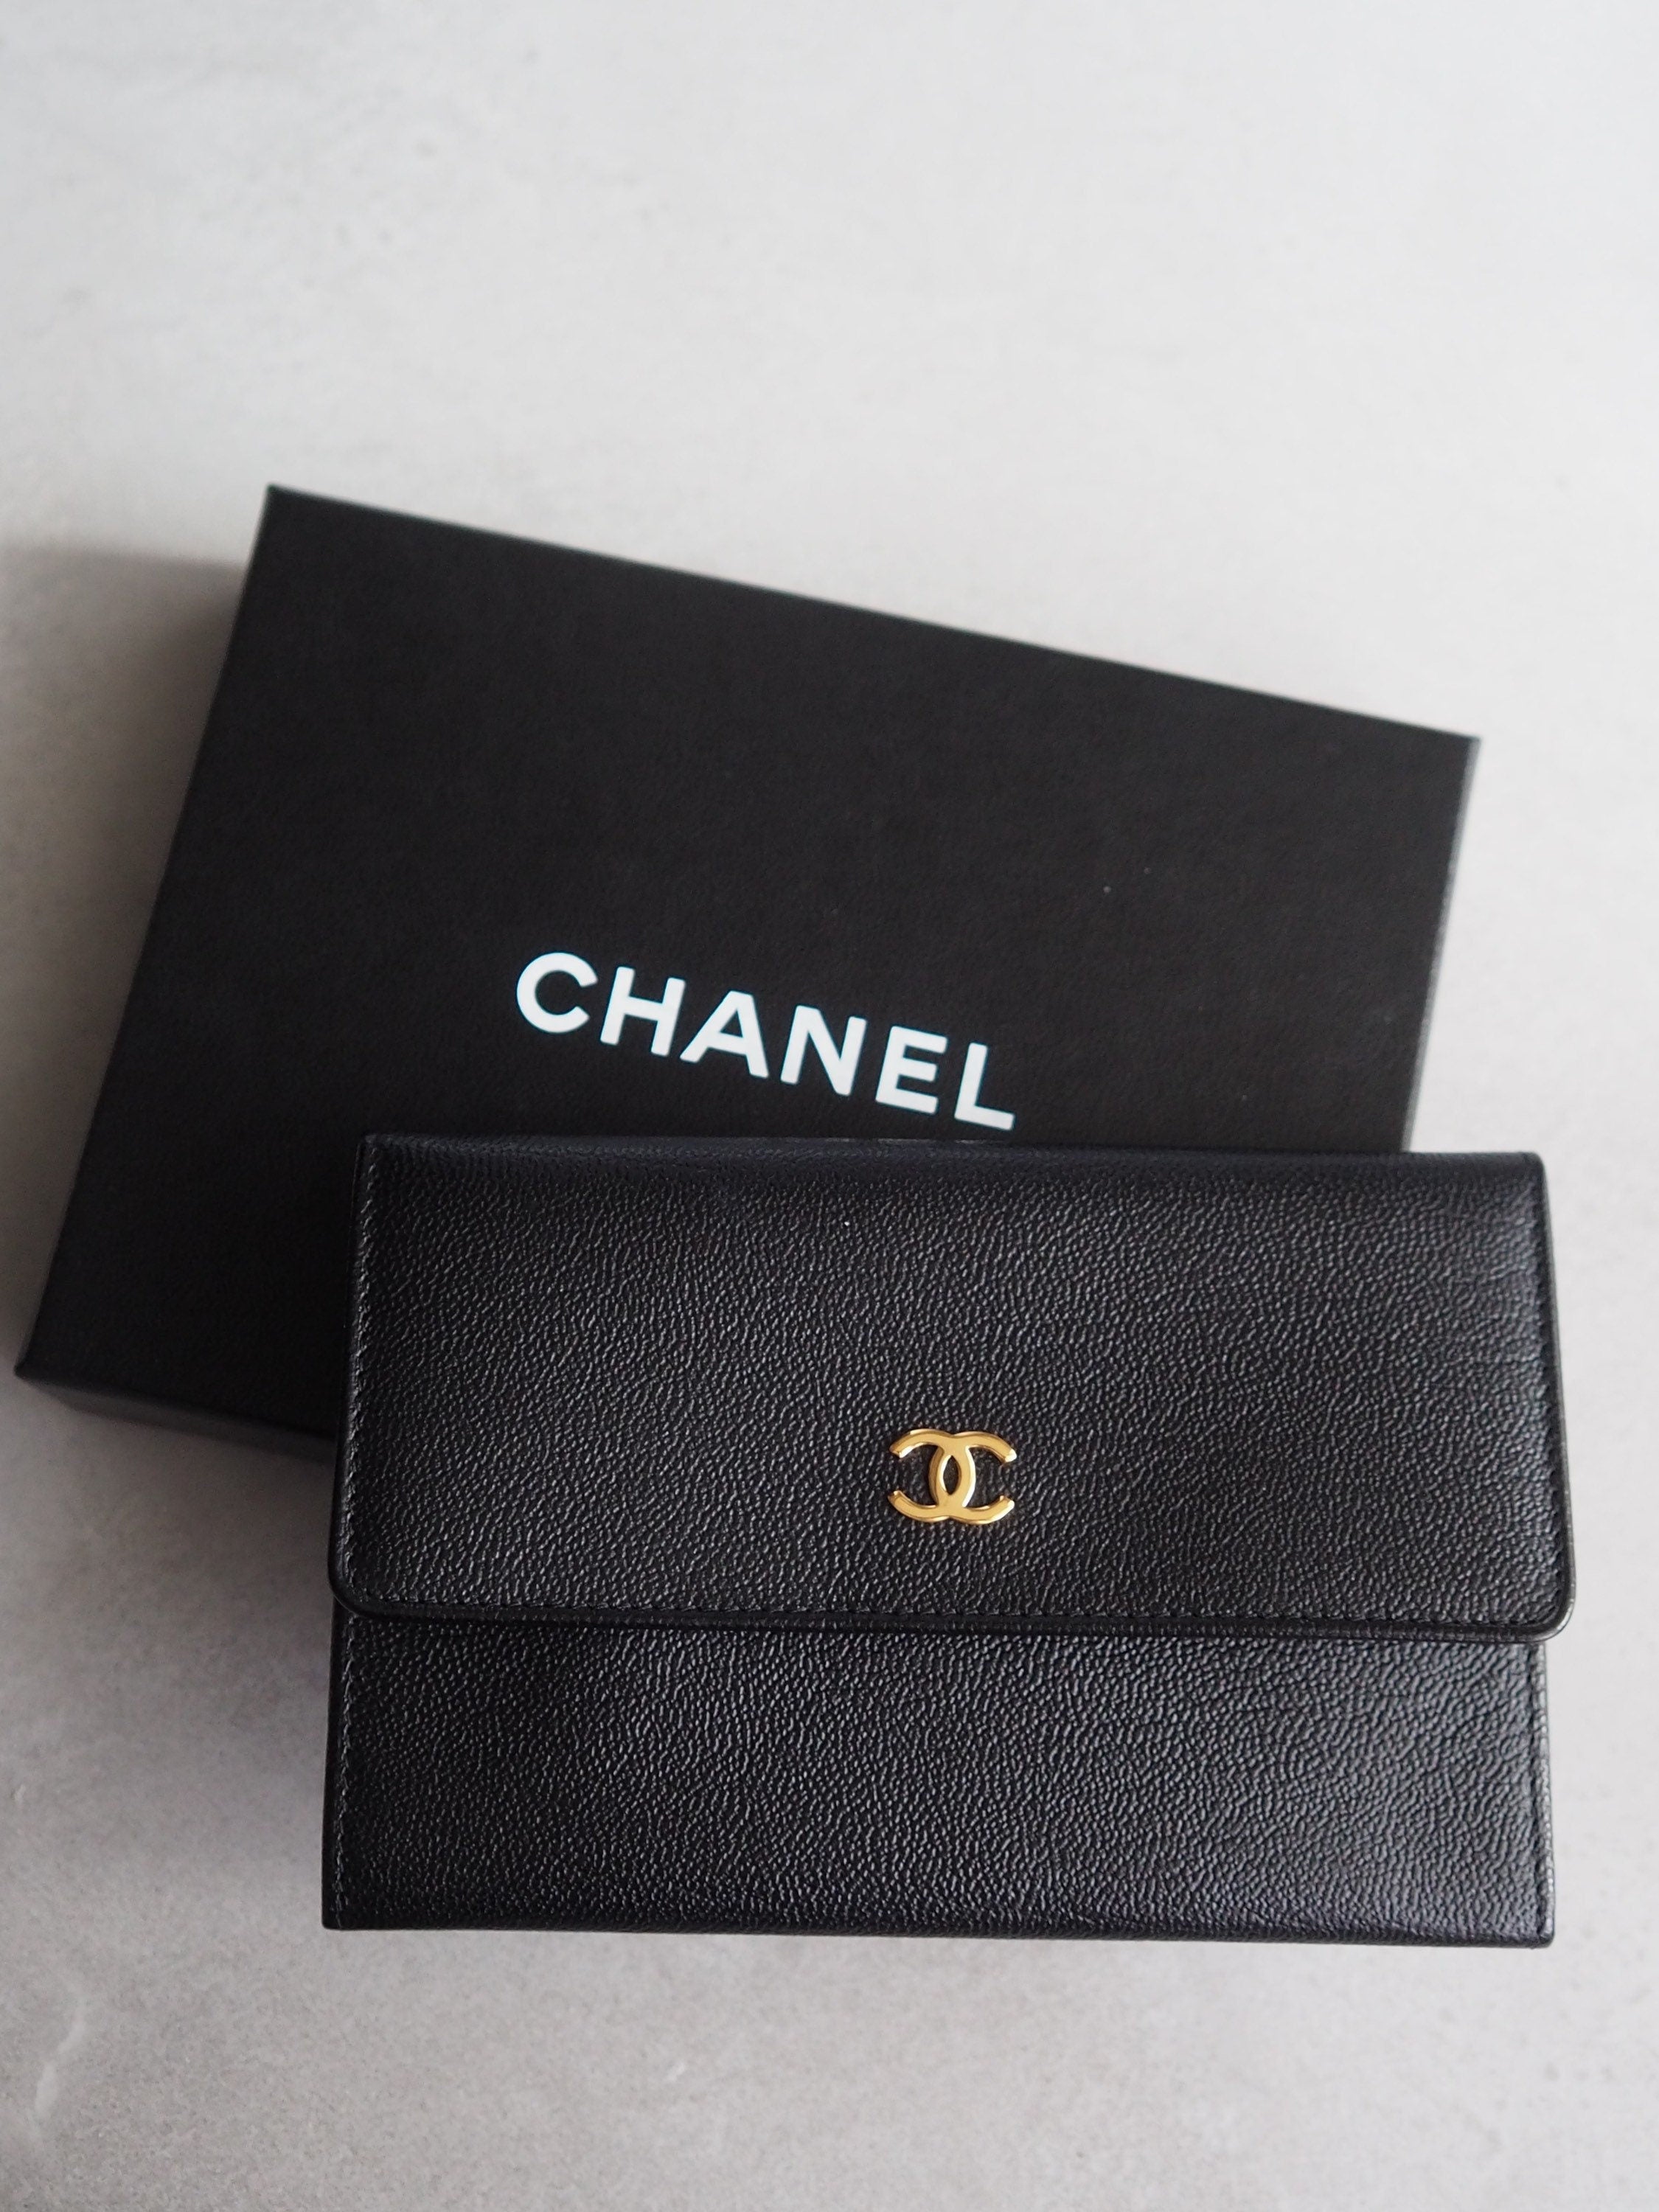 CHANEL COCO Wallet Purse Compact Leather Black Authentic Vintage Box